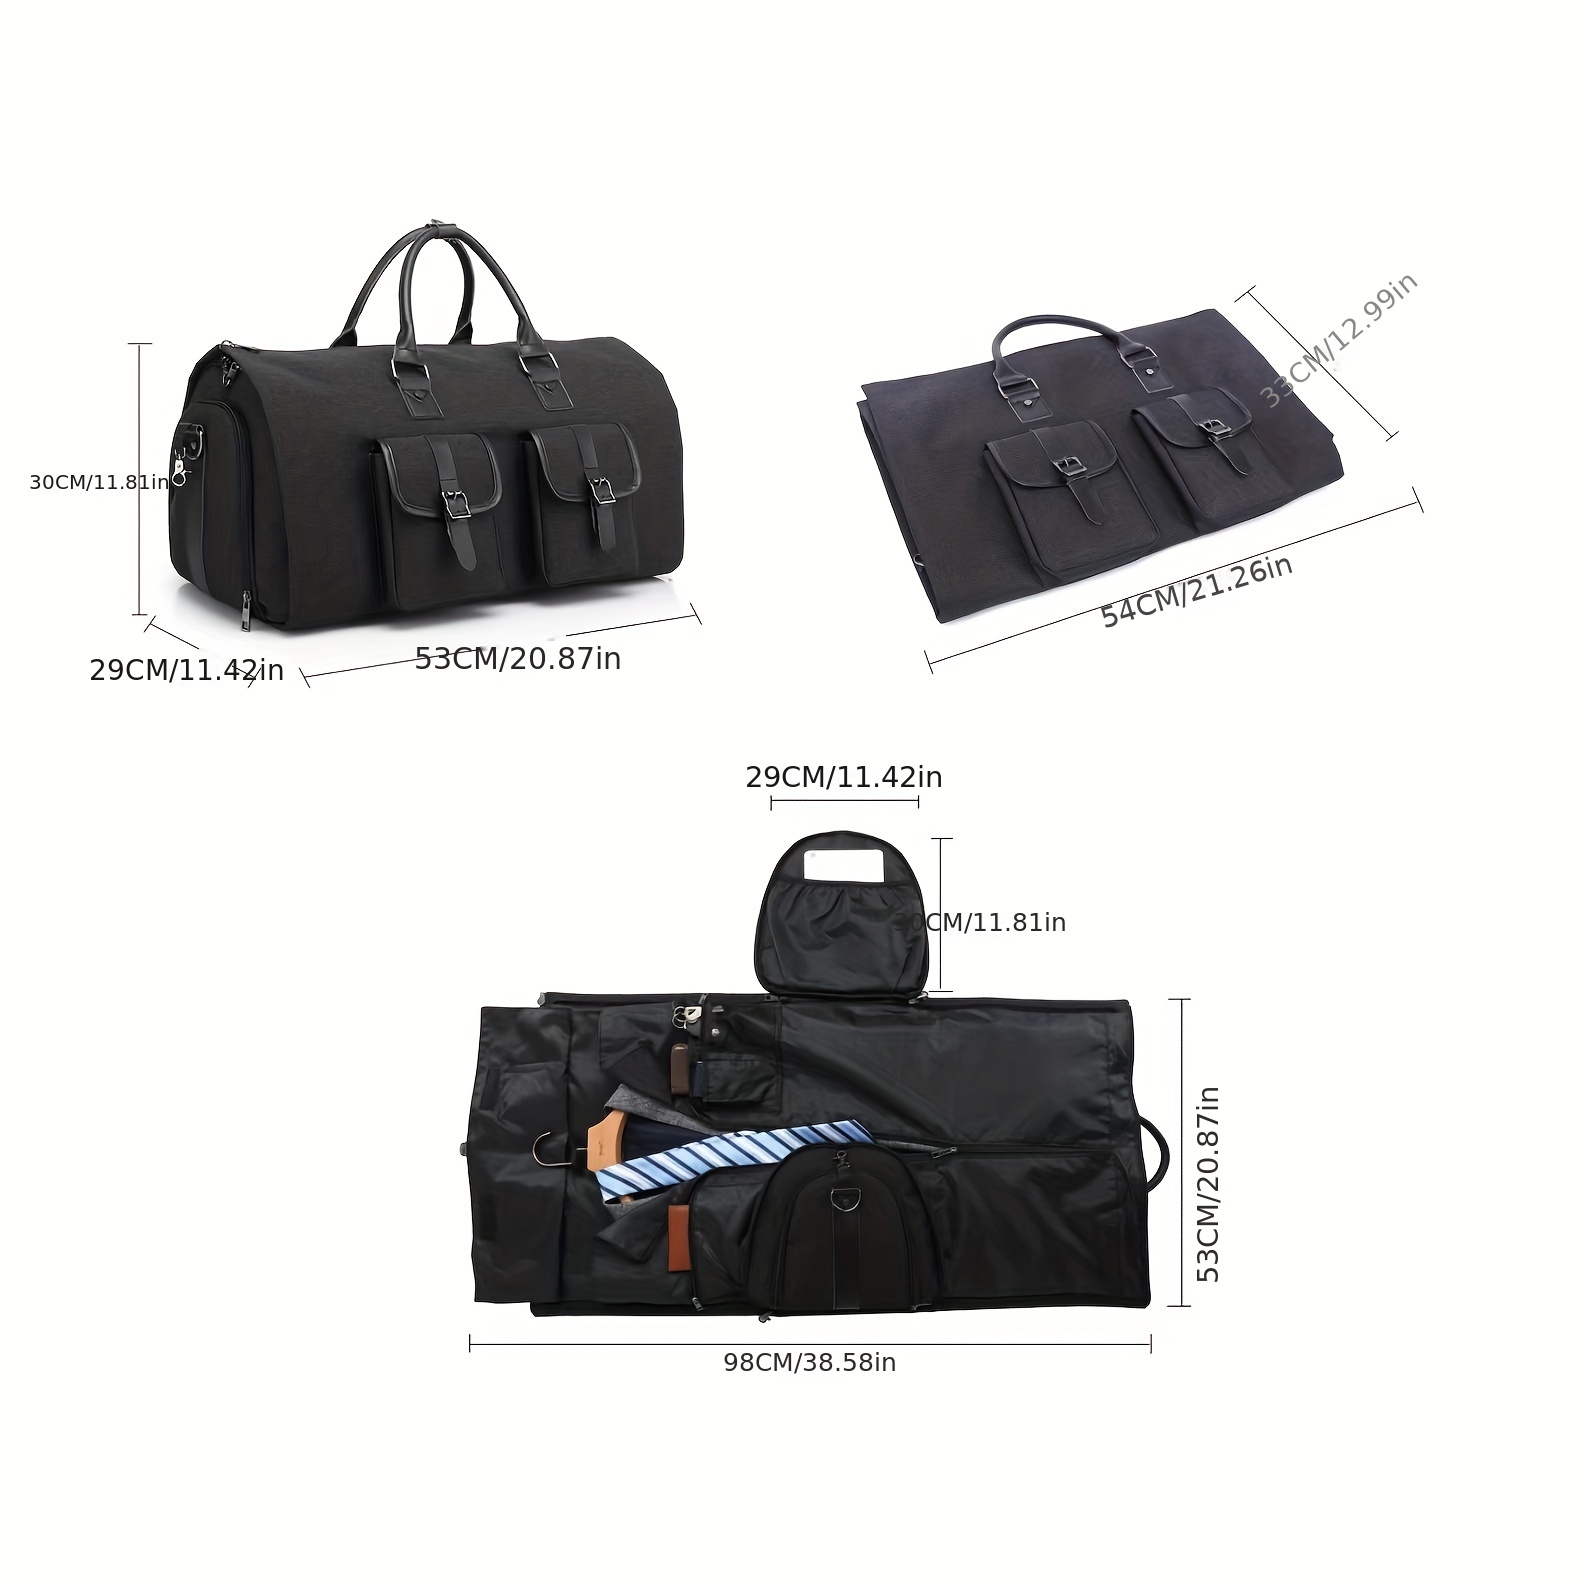 Convertible Garment Bags for Travel, Suit Bag Travel Carry On, Garment  Duffle Bags for Travel, Garment Bags for Hanging Clothes Travel, Suit  Travel